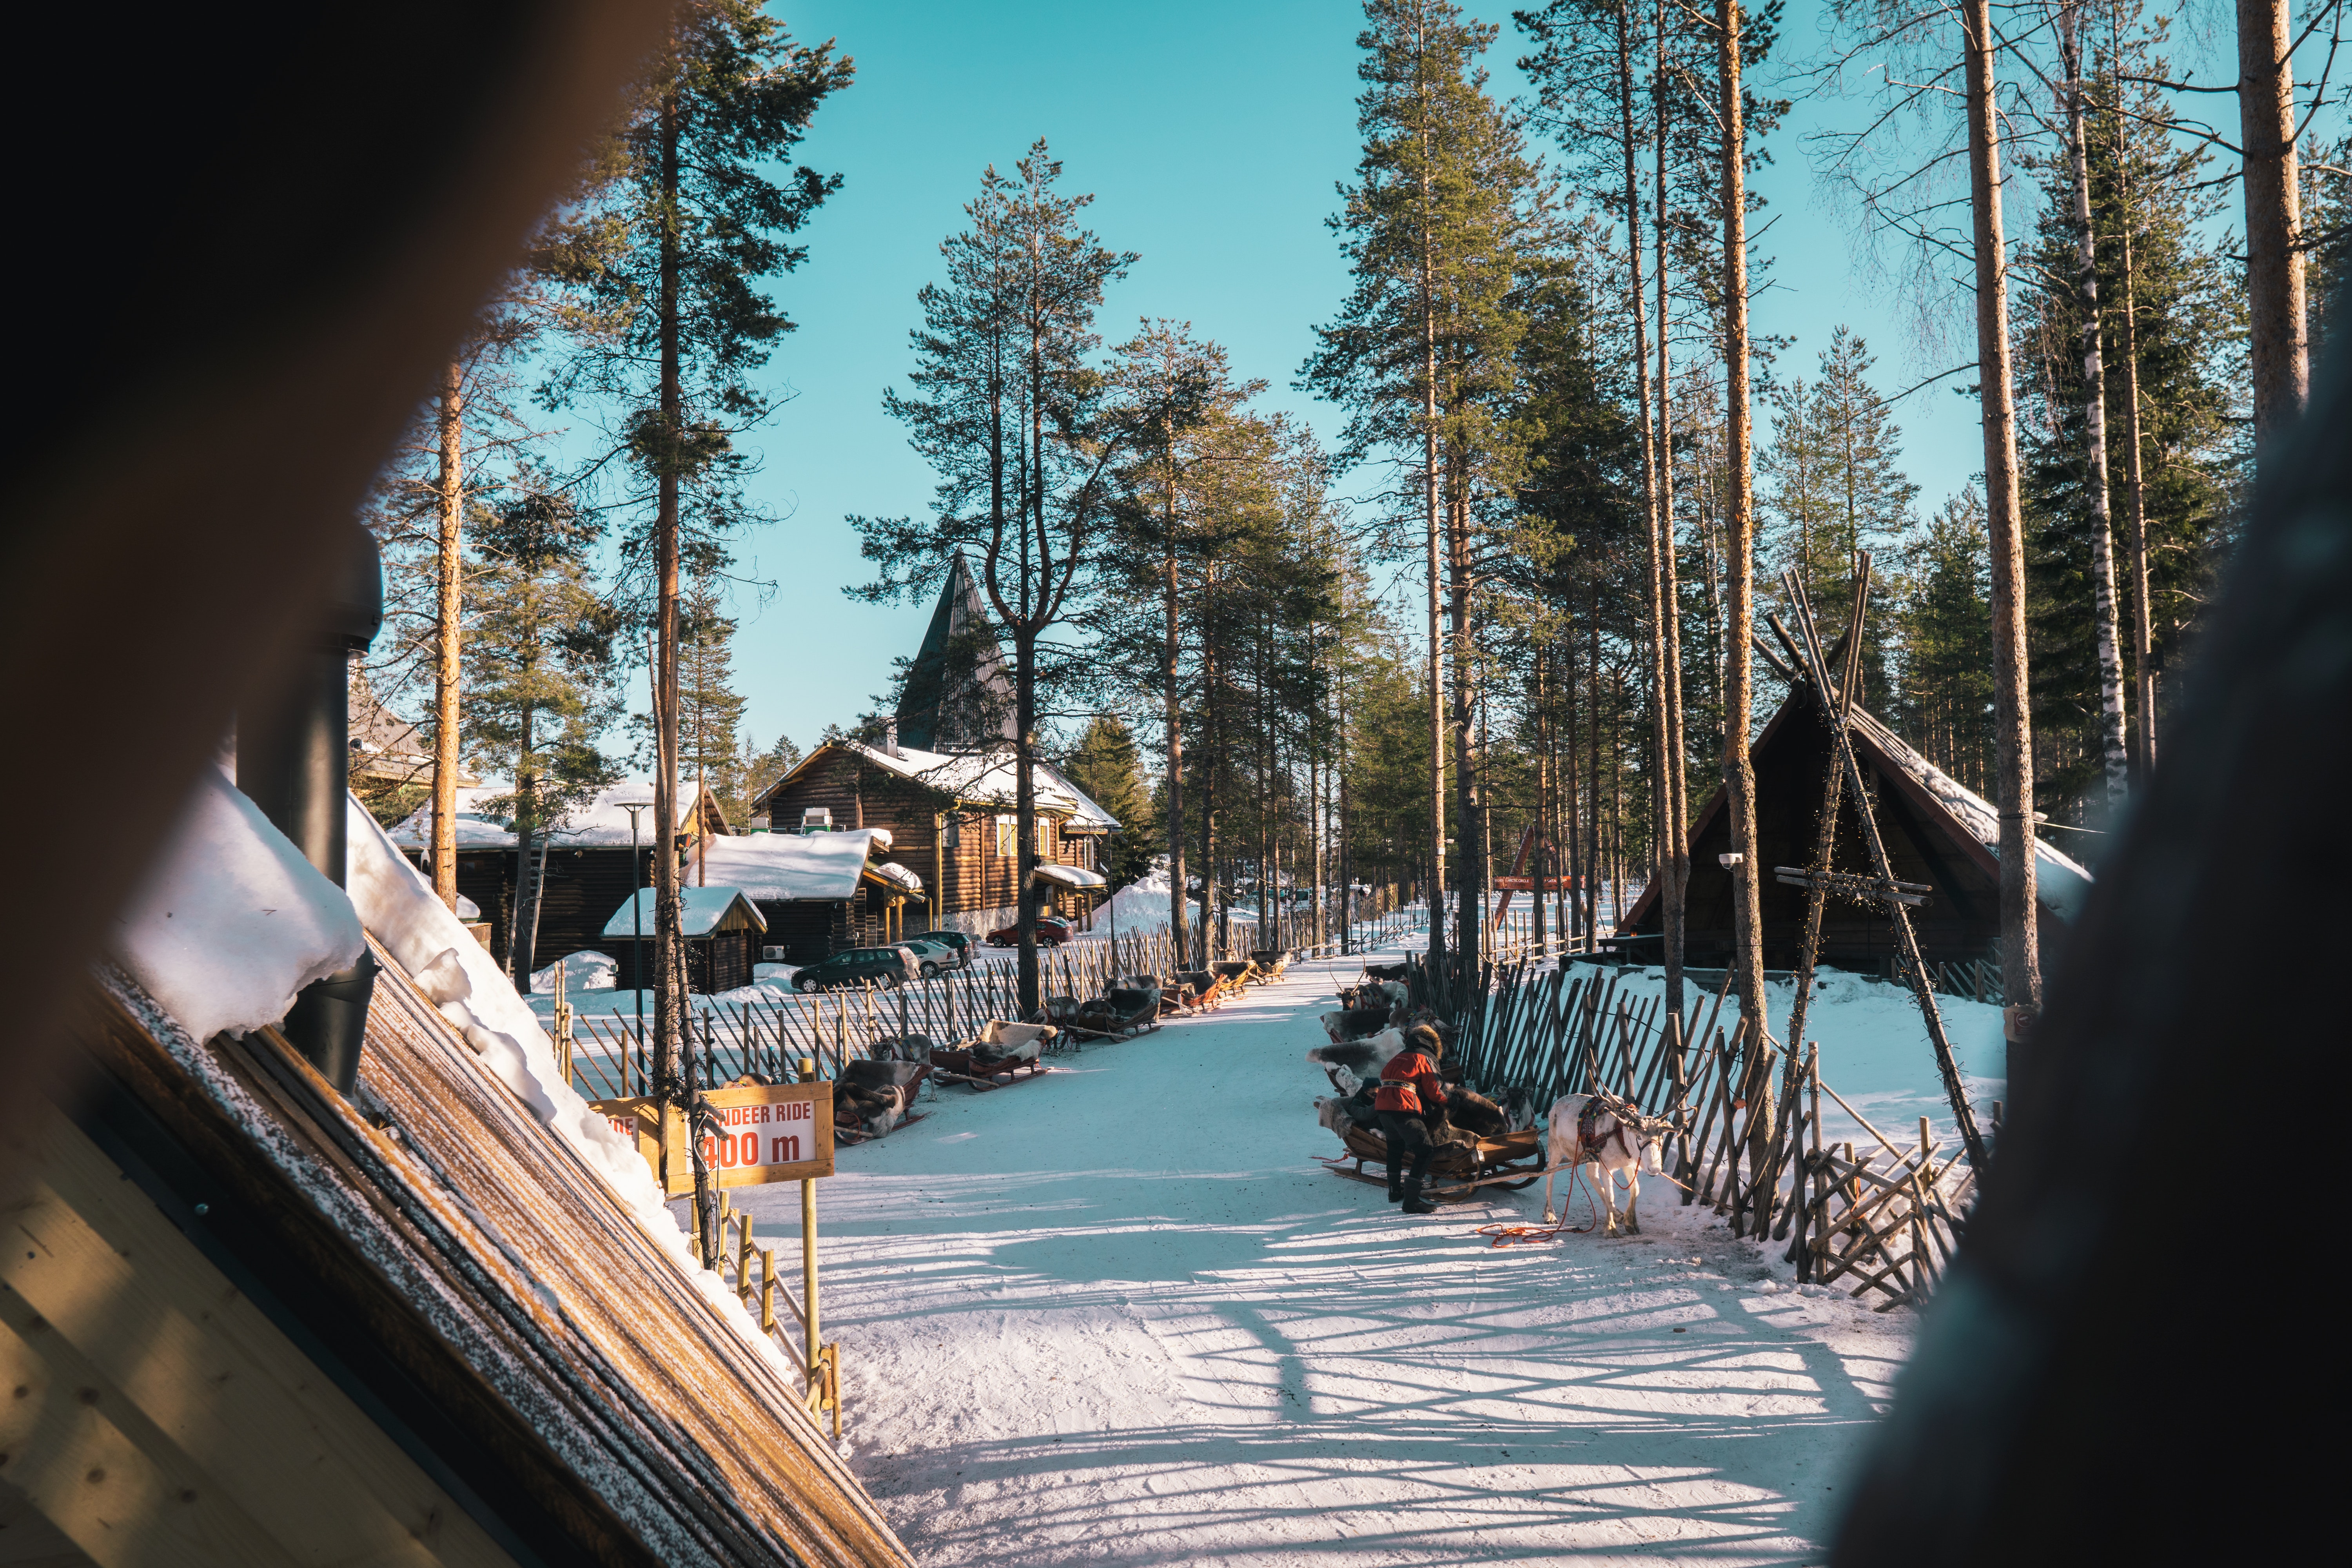 Finland in February